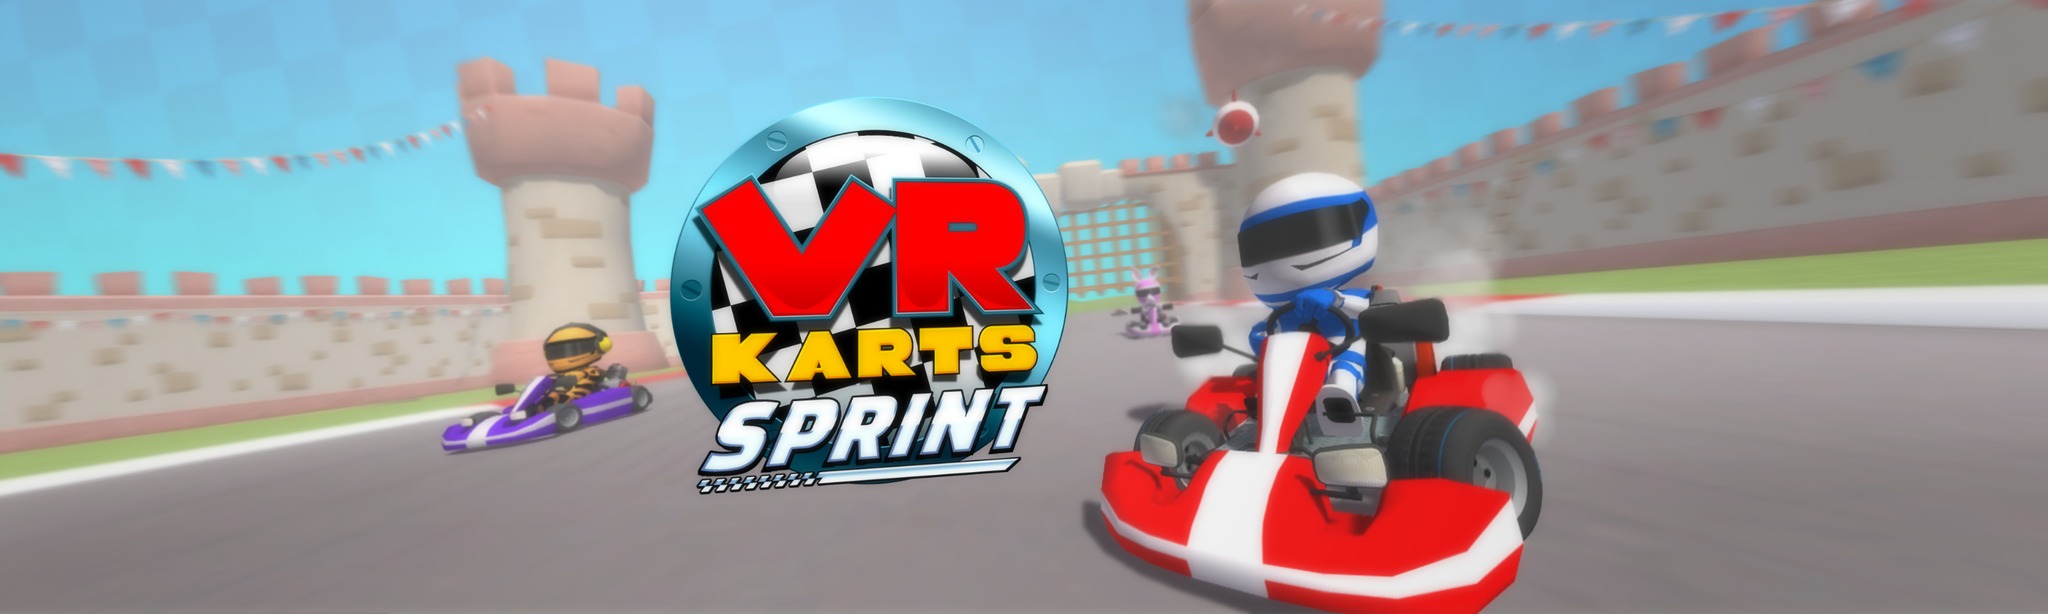 Min Credo Alexander Graham Bell VR Karts: Sprint | SideQuest